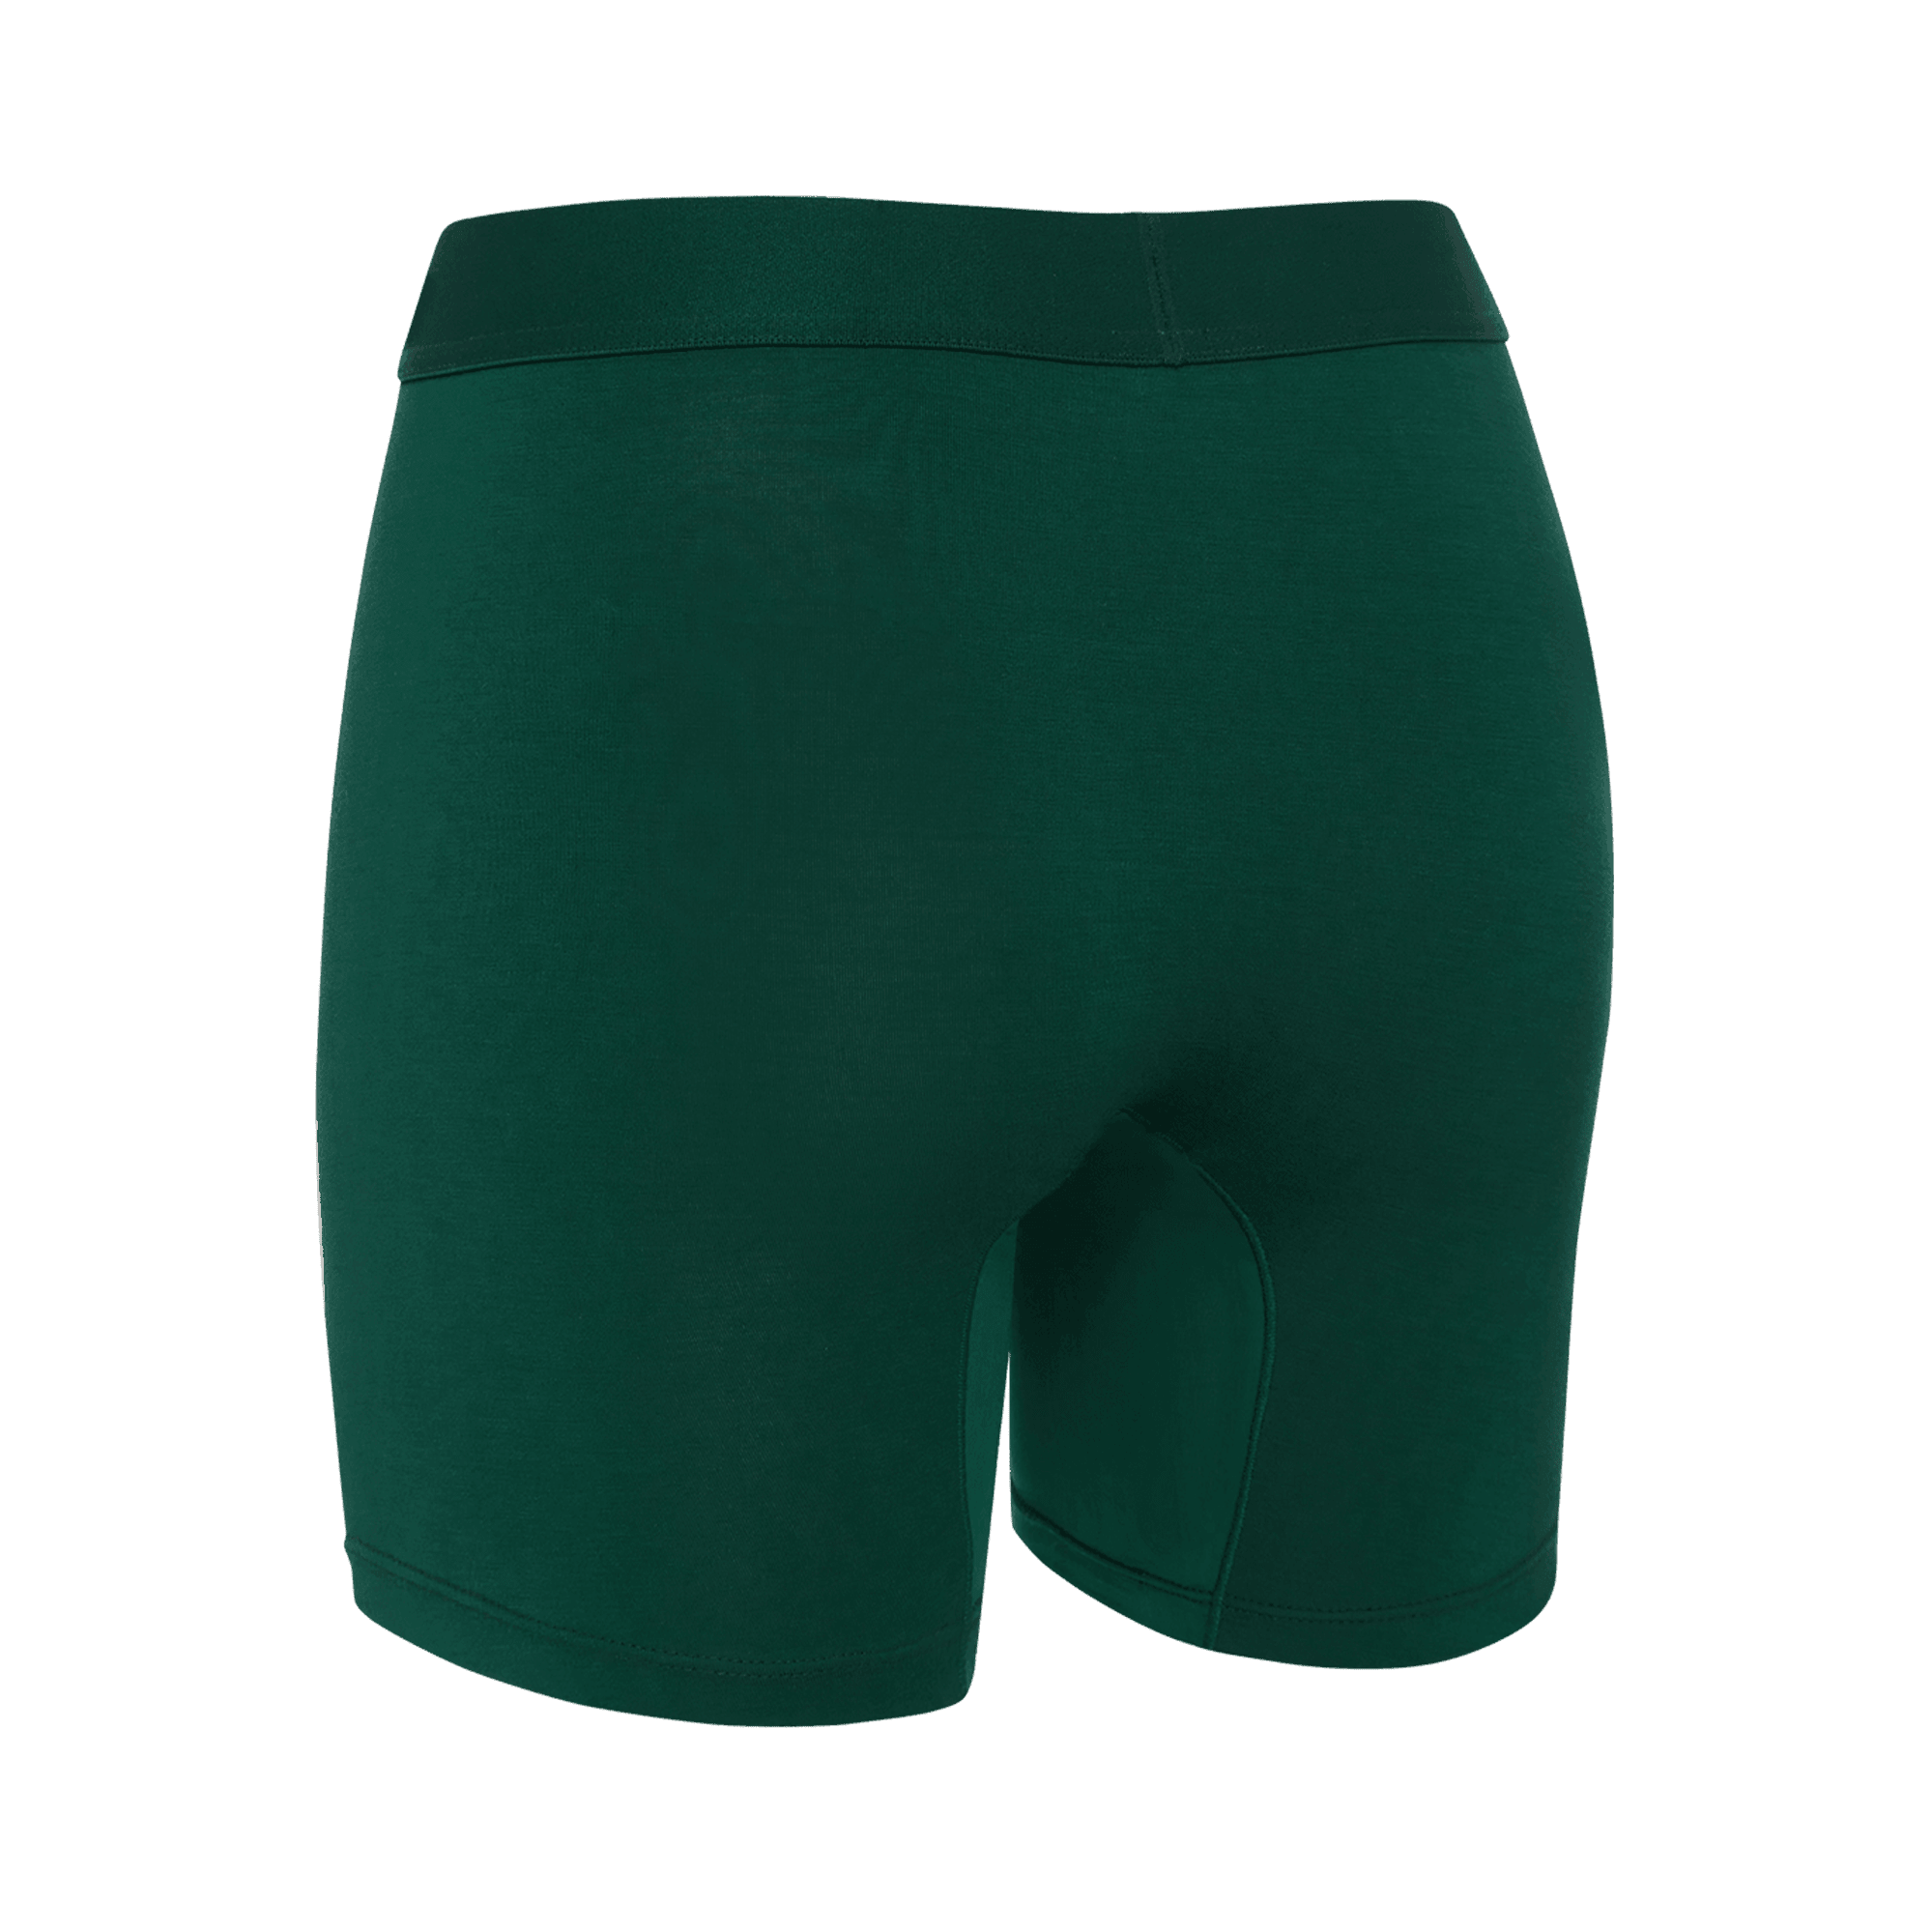 Women's Body Shorts - Forest